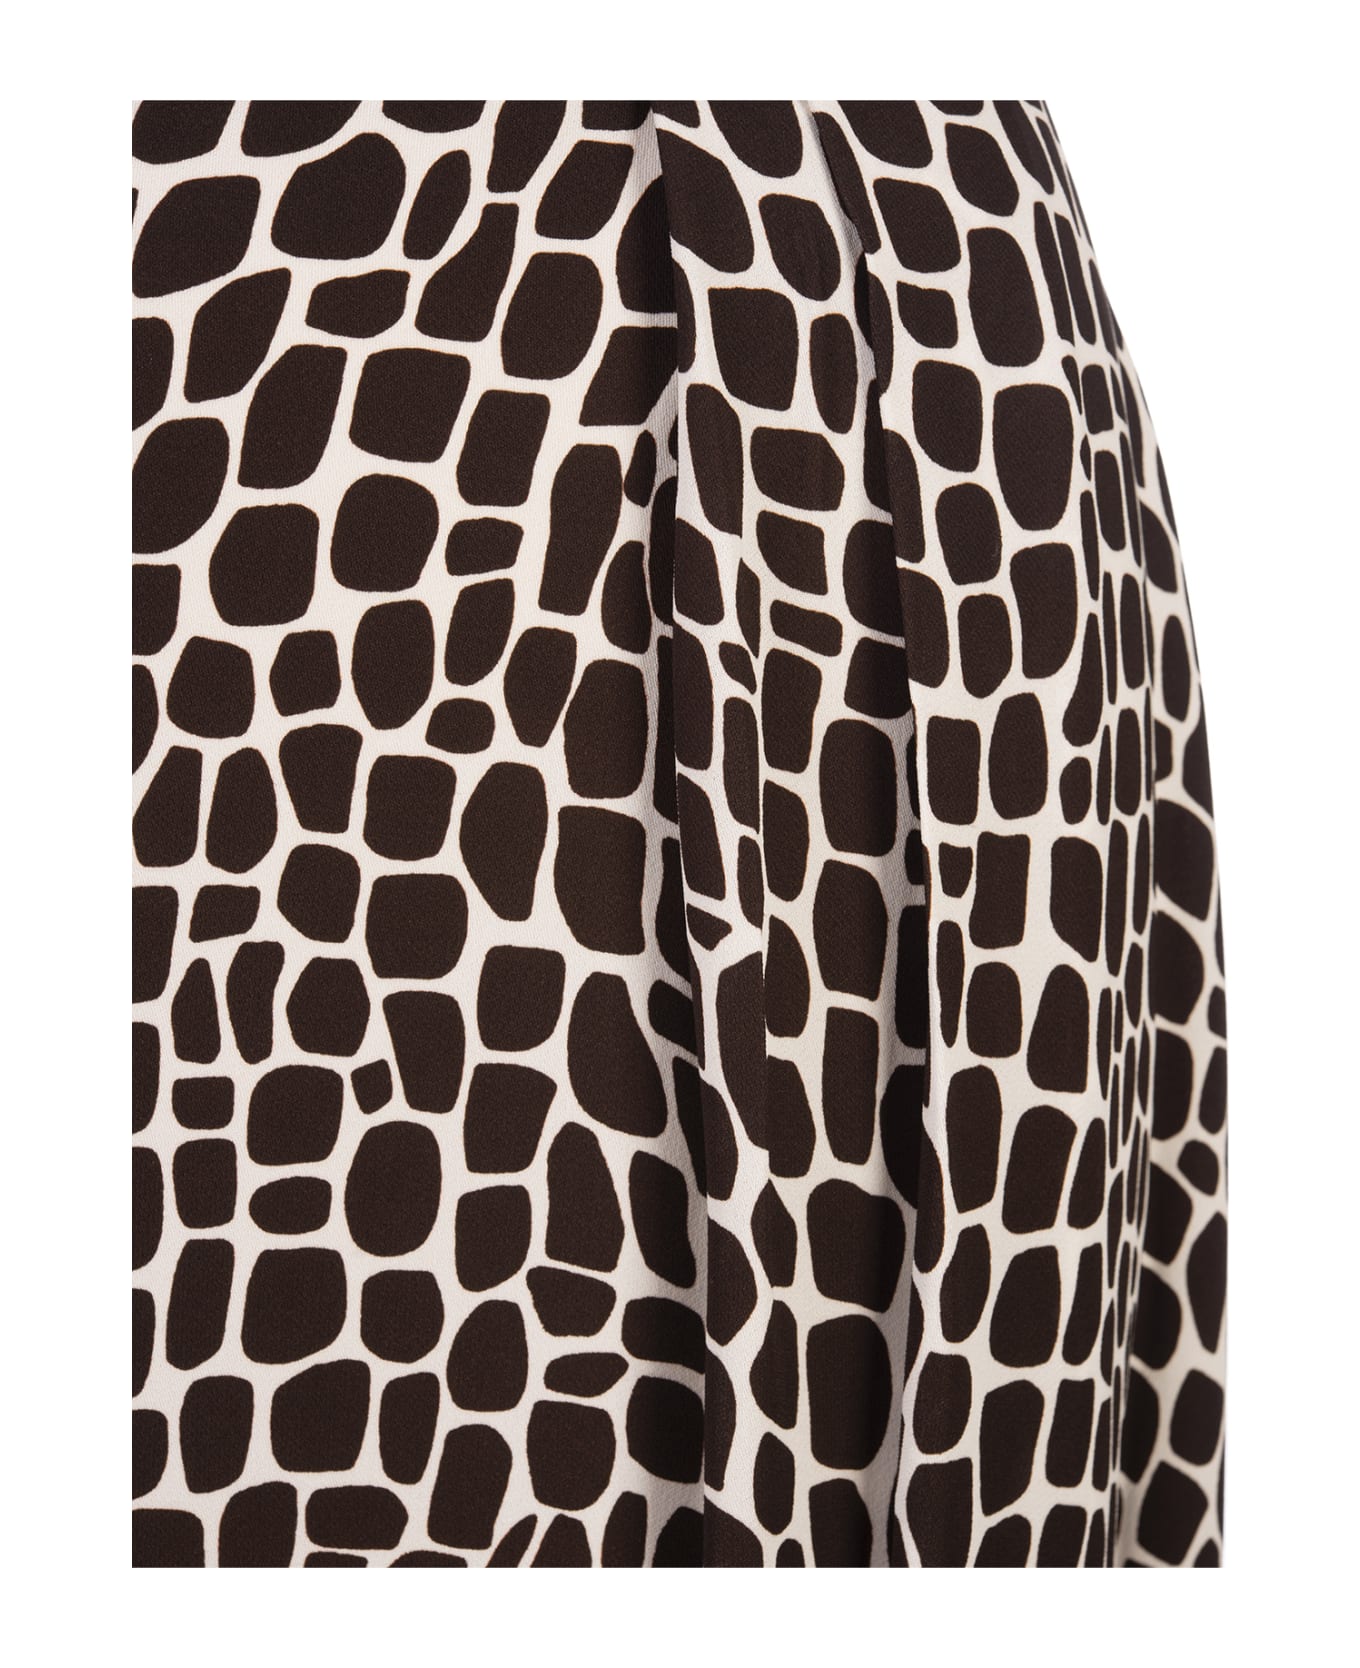 MSGM Asymmetrical Long Skirt With Brown Animalier Print - Brown スカート